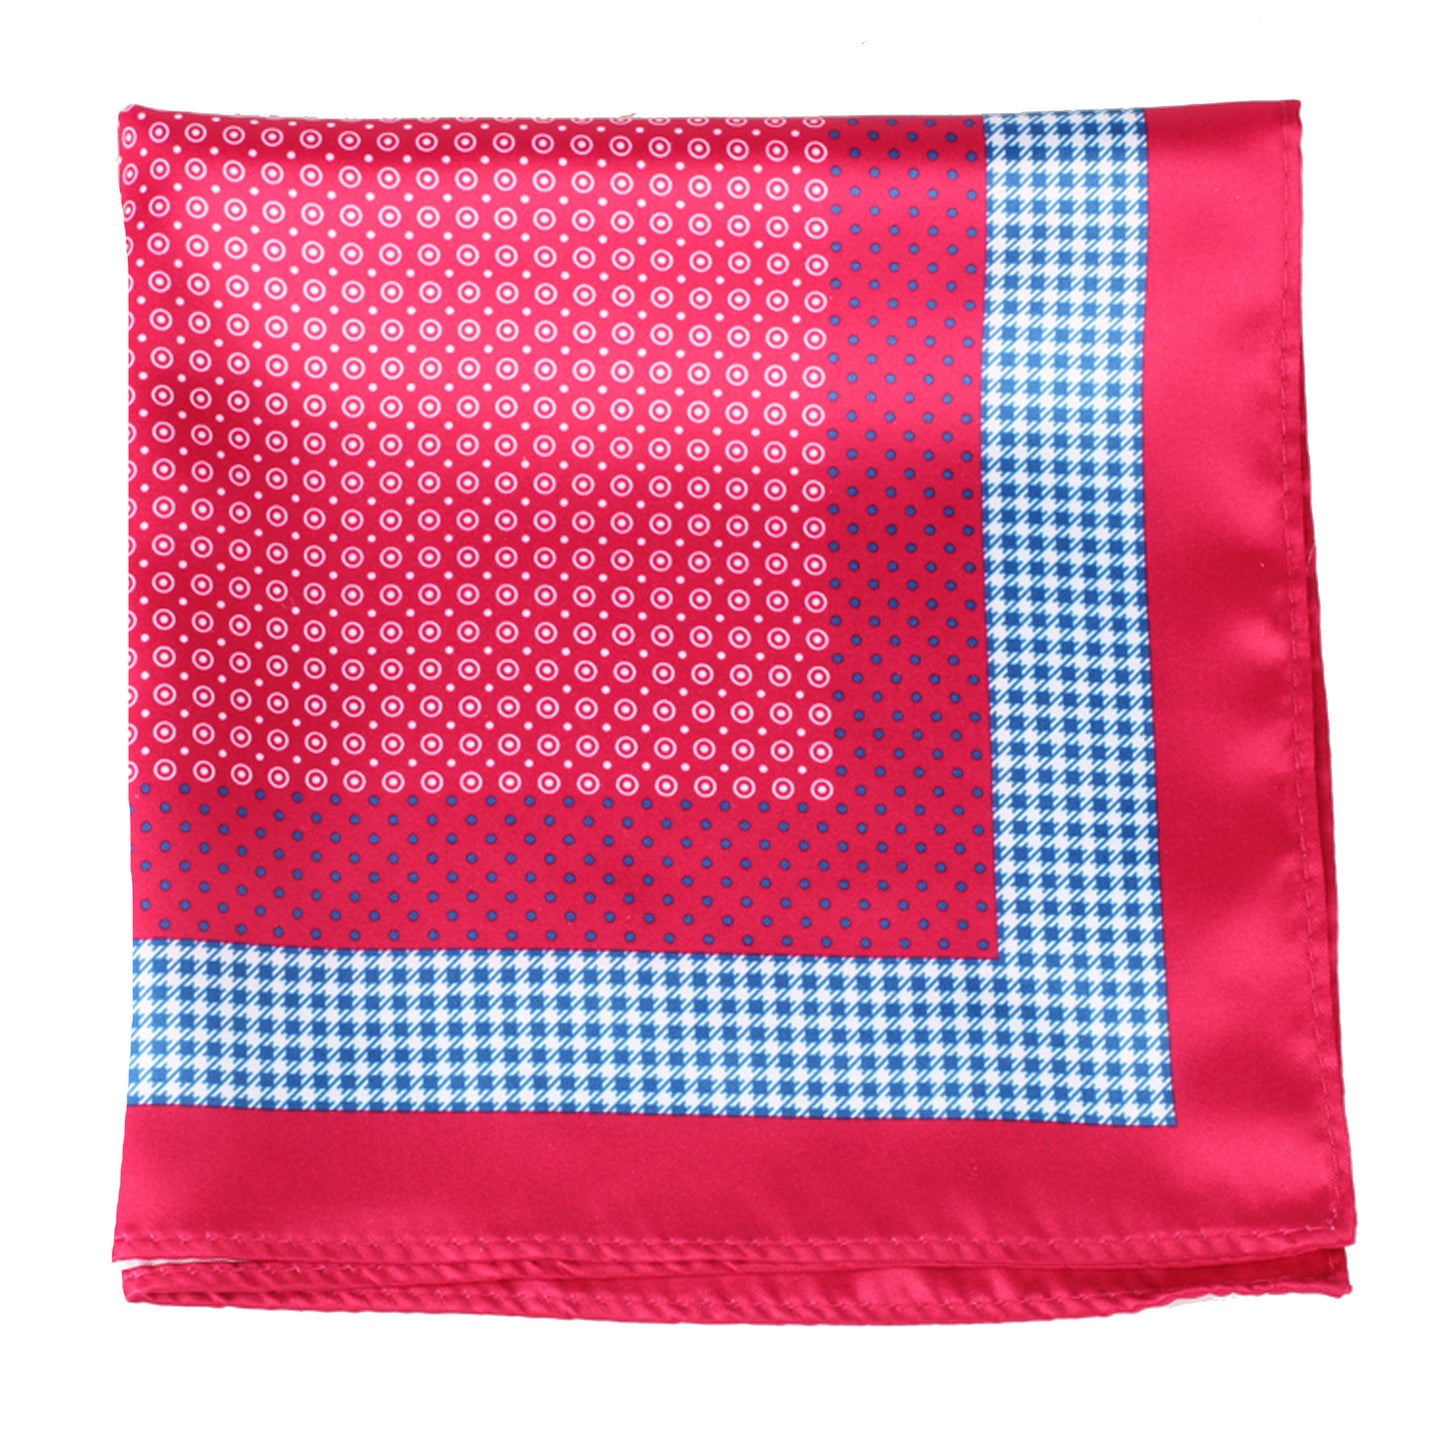 Red/White Polka Dot Pocket Square + SquareGuard